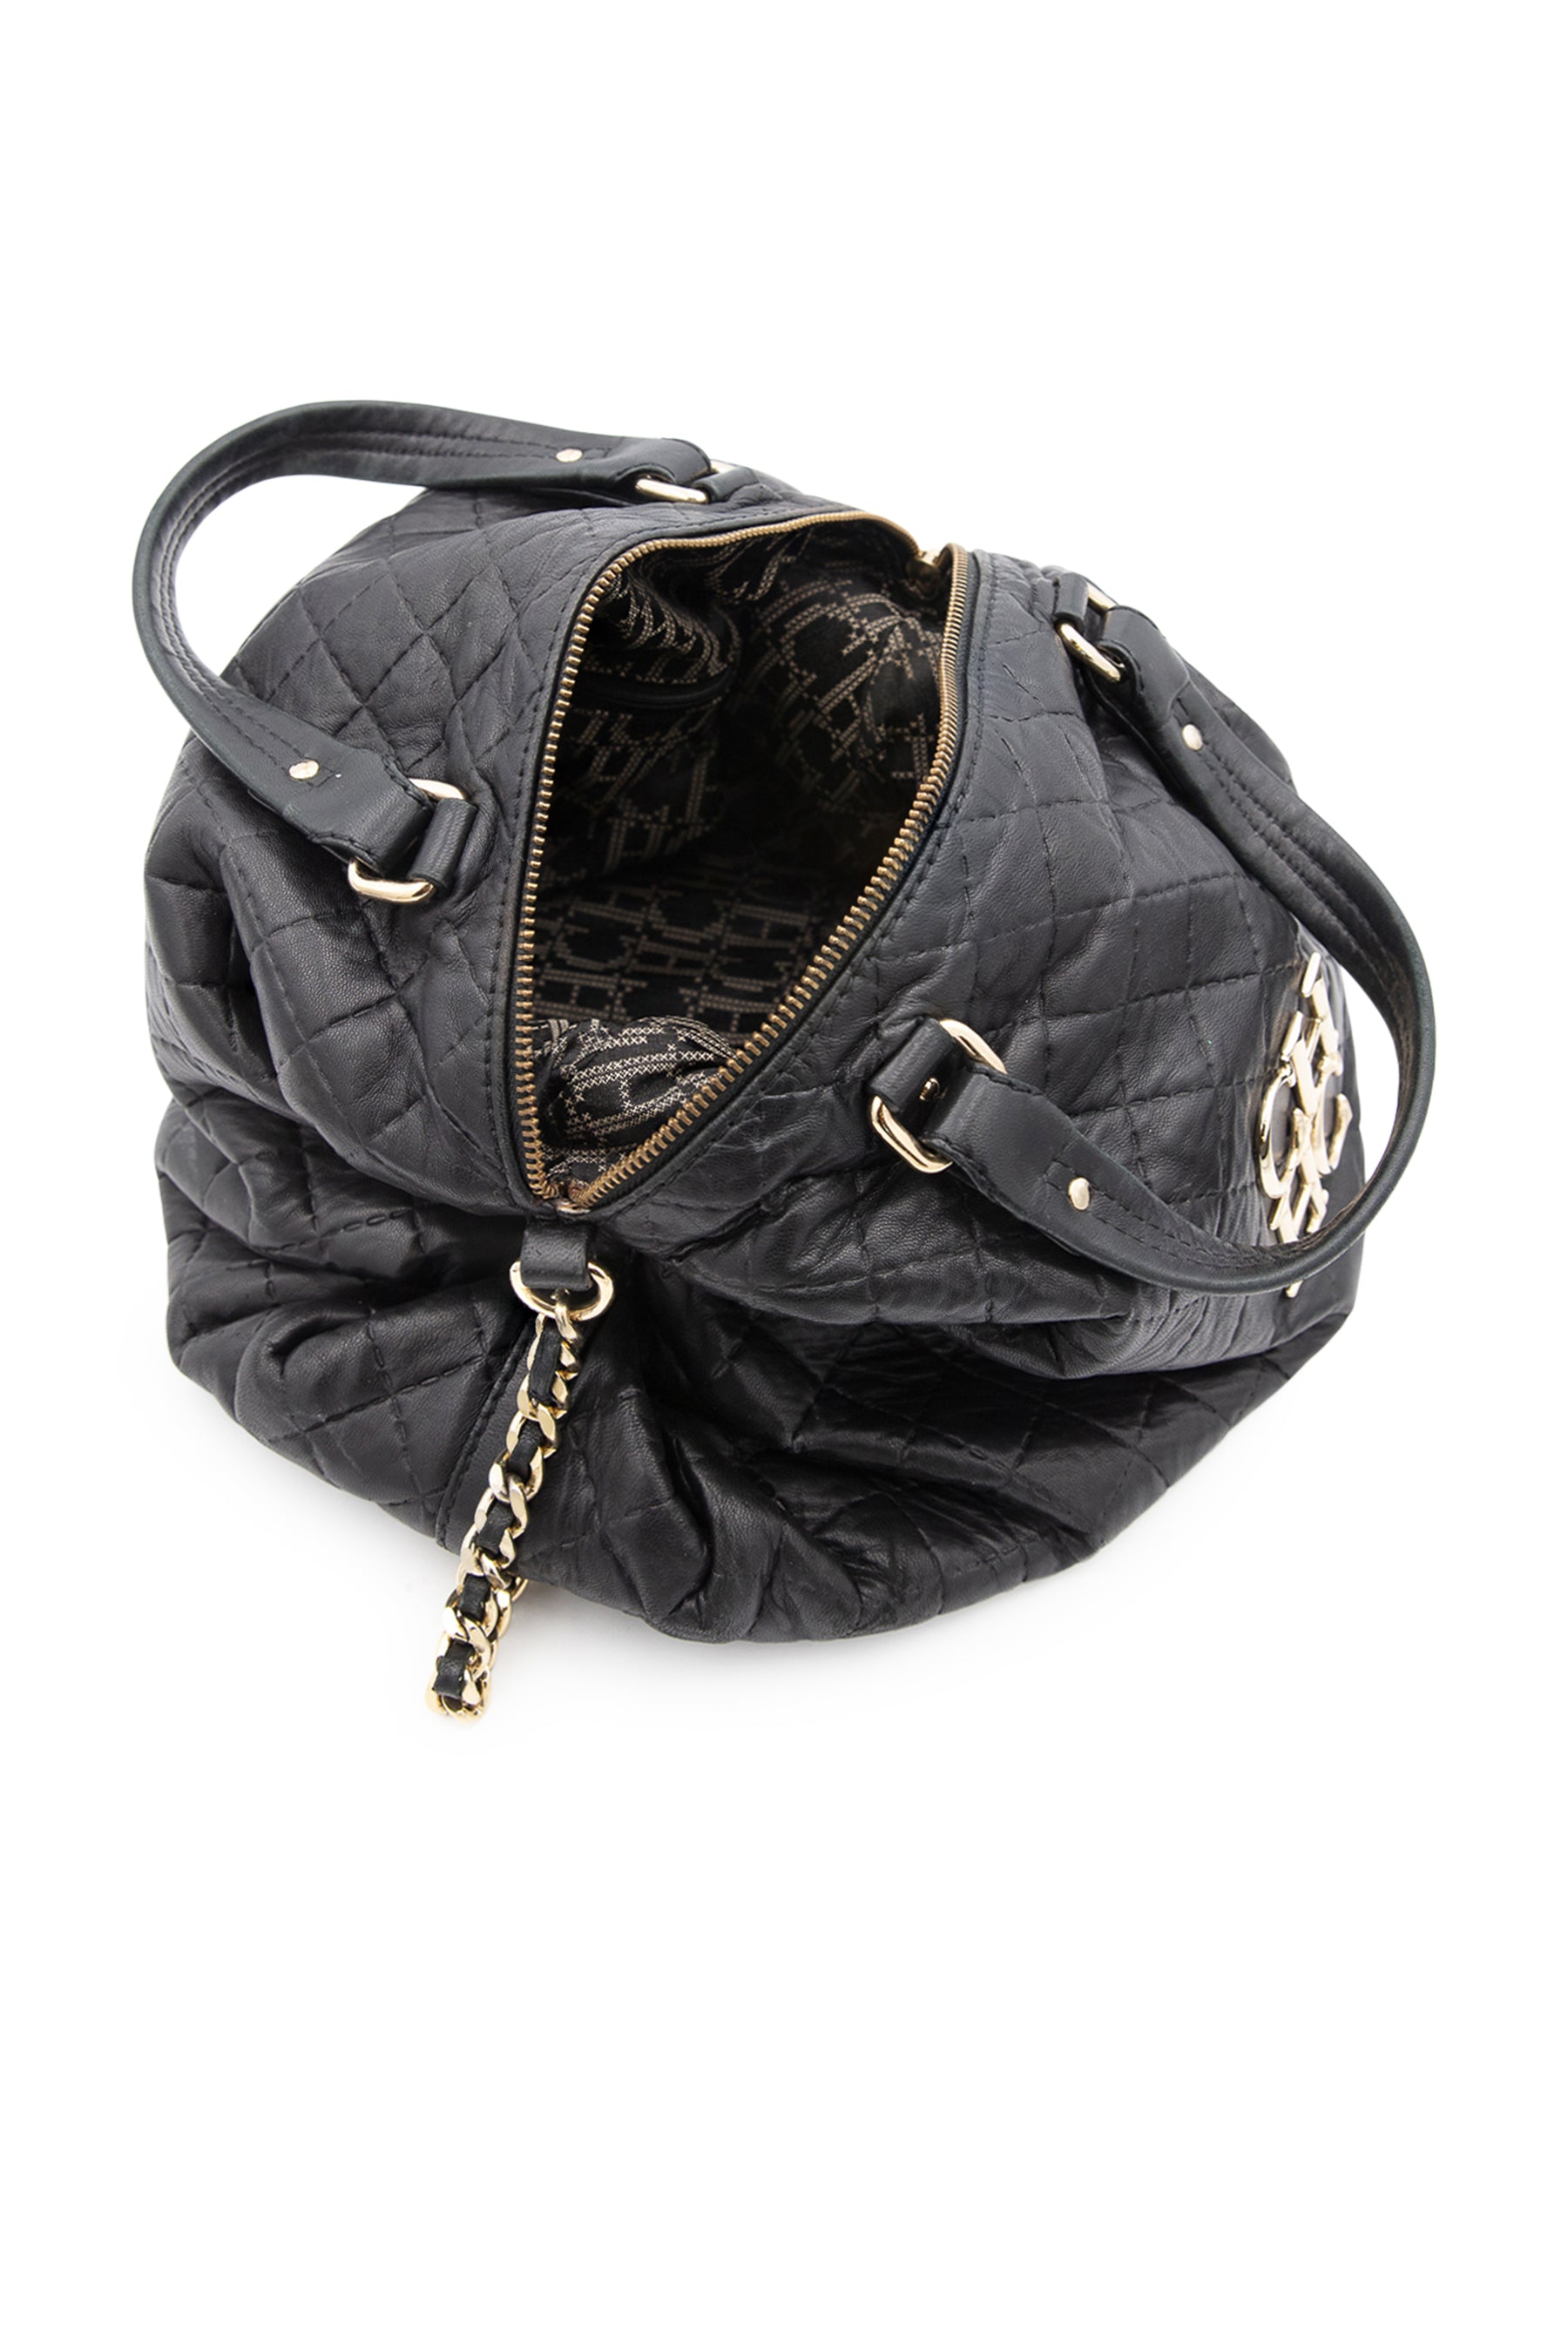 Carolina Herrera Leather Handle Bag